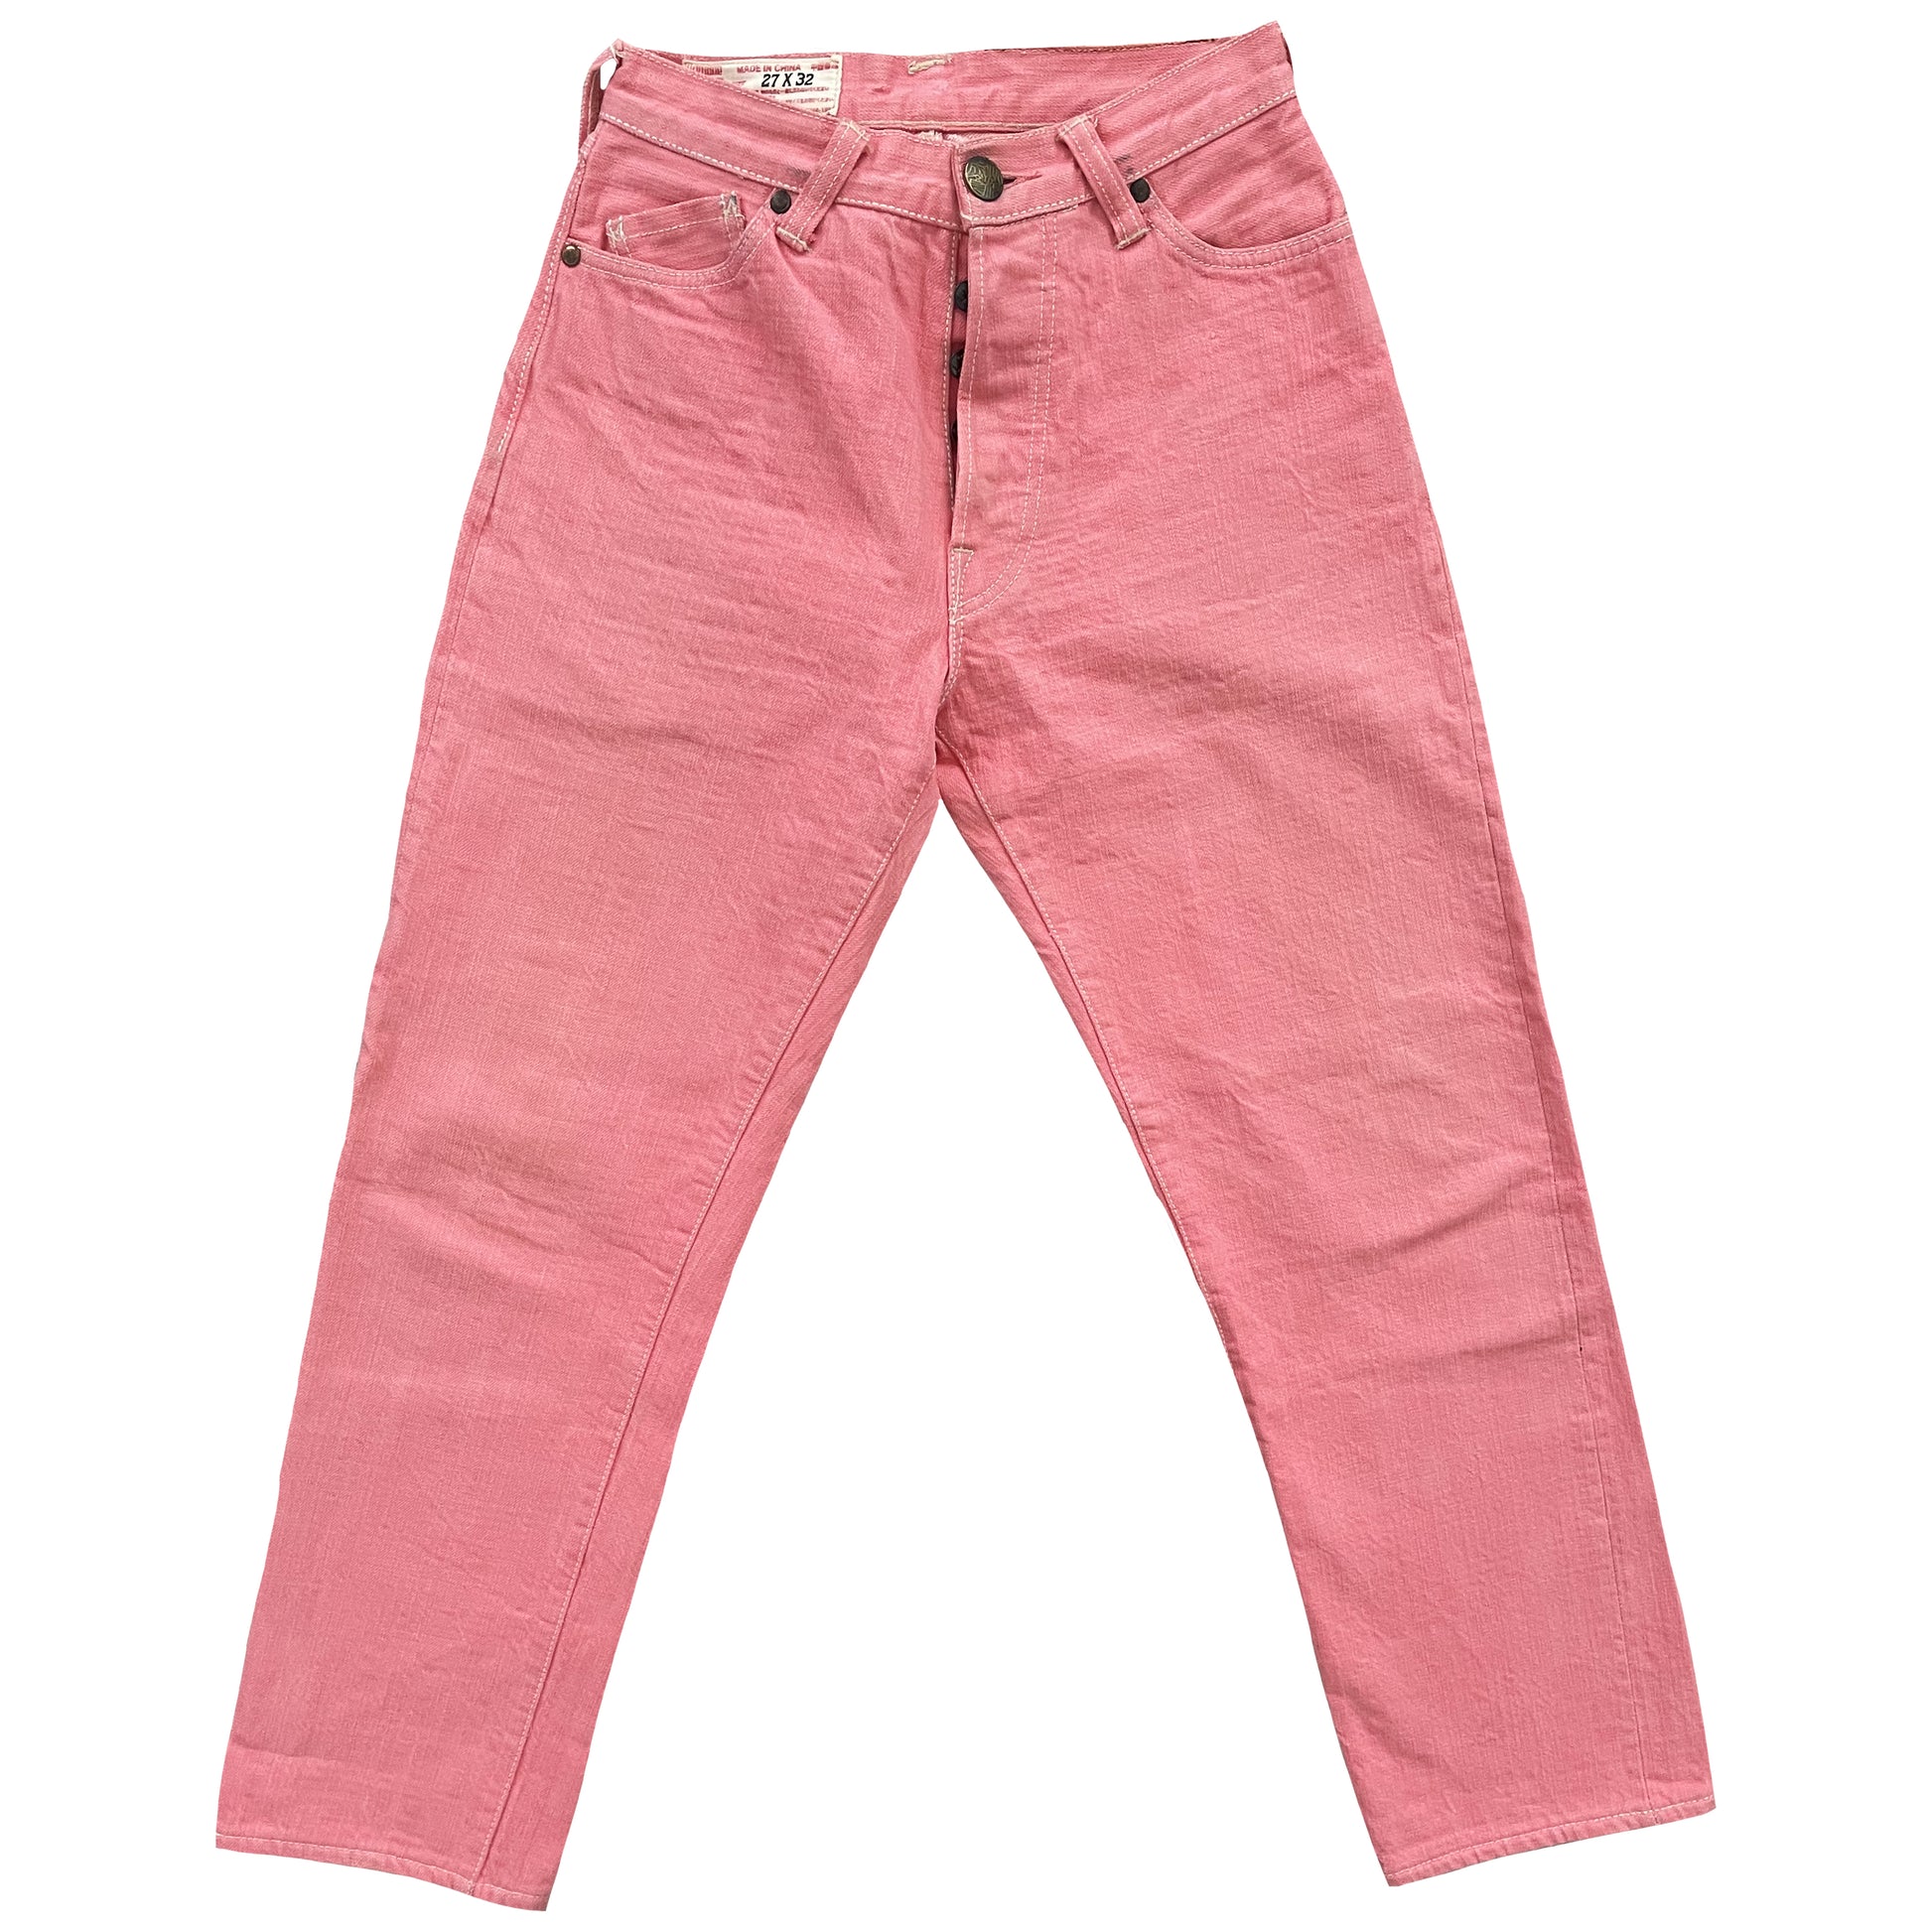 Evisu Daicock Pink Jeans